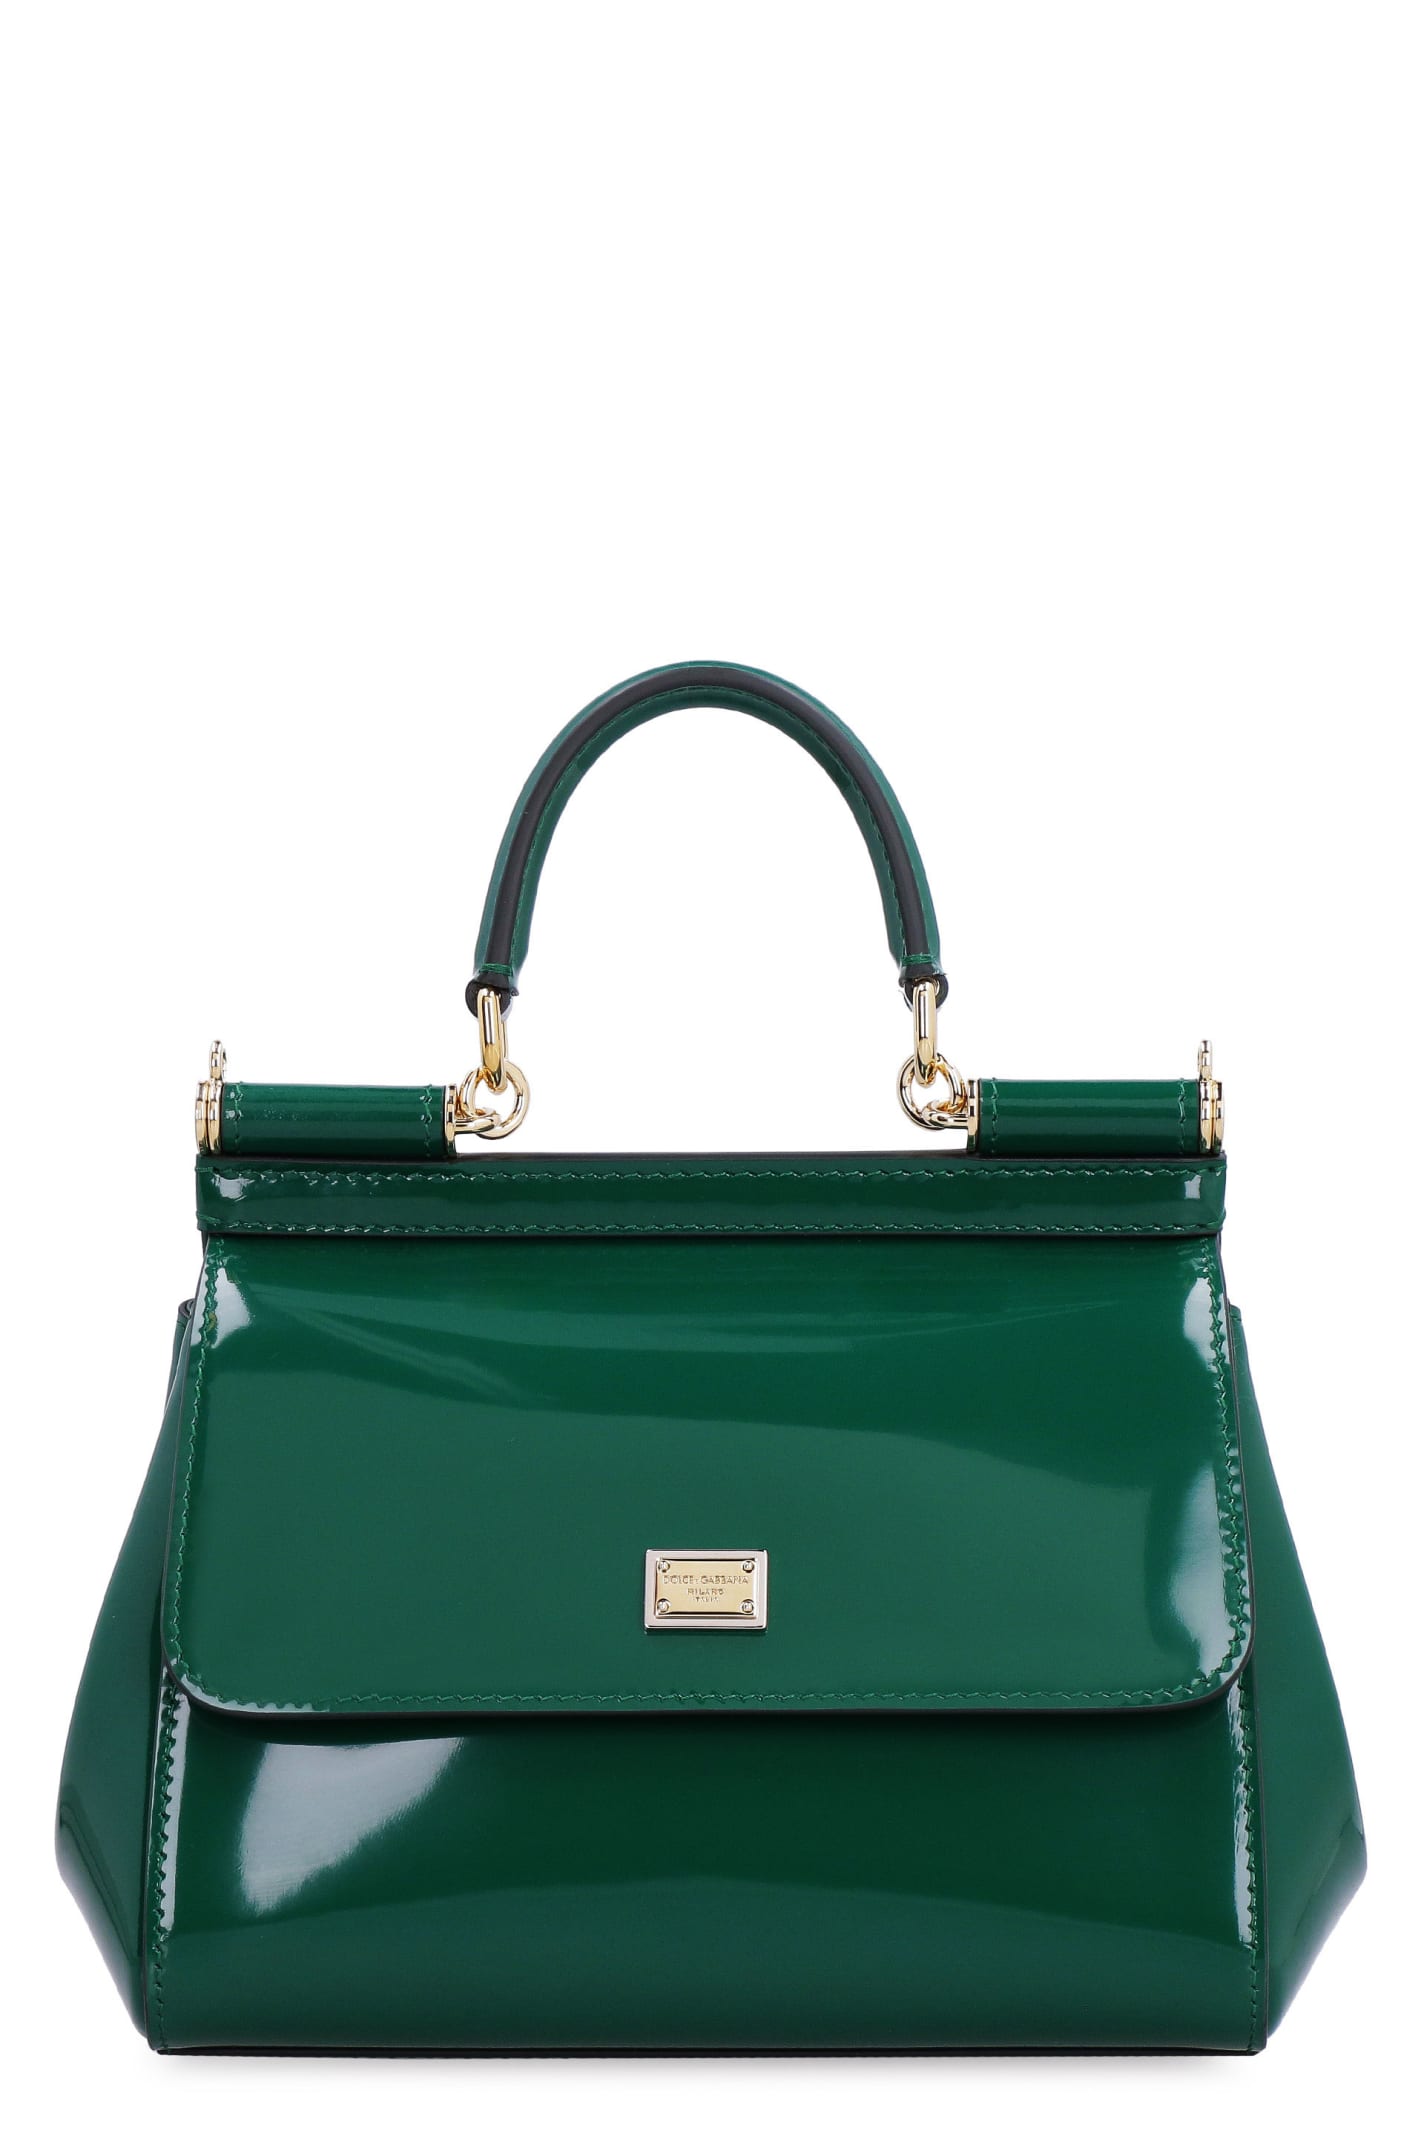 Dolce & Gabbana Sicily Leather Mini Handbag